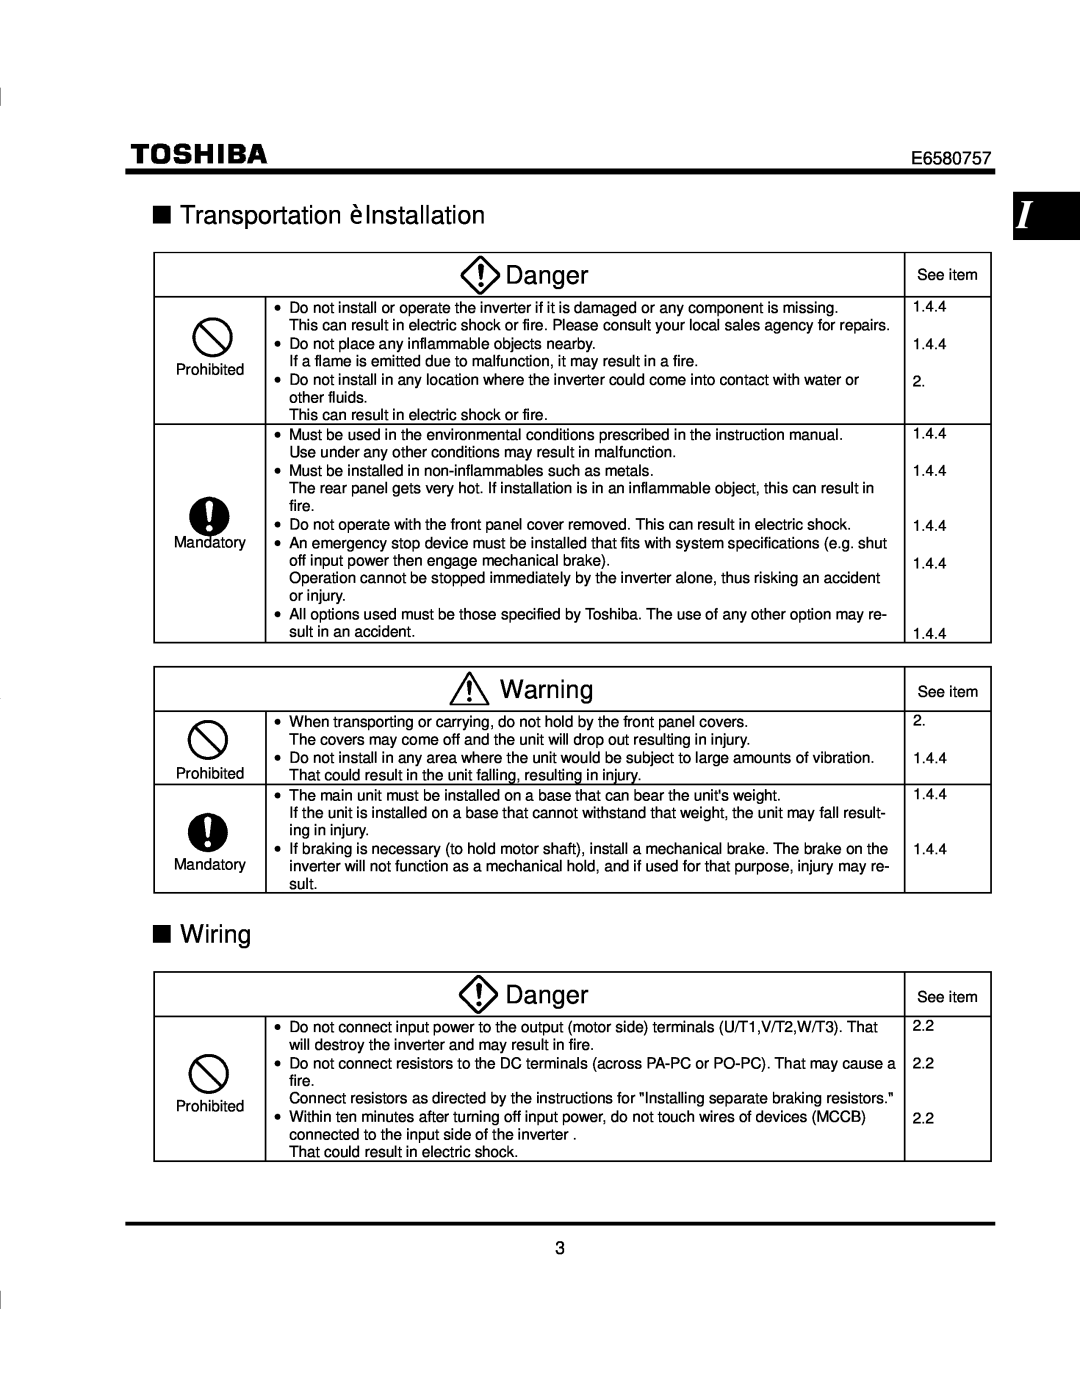 Toshiba VF-S9 manual Transportation ‚ Installation, Wiring, Danger, E6580757 